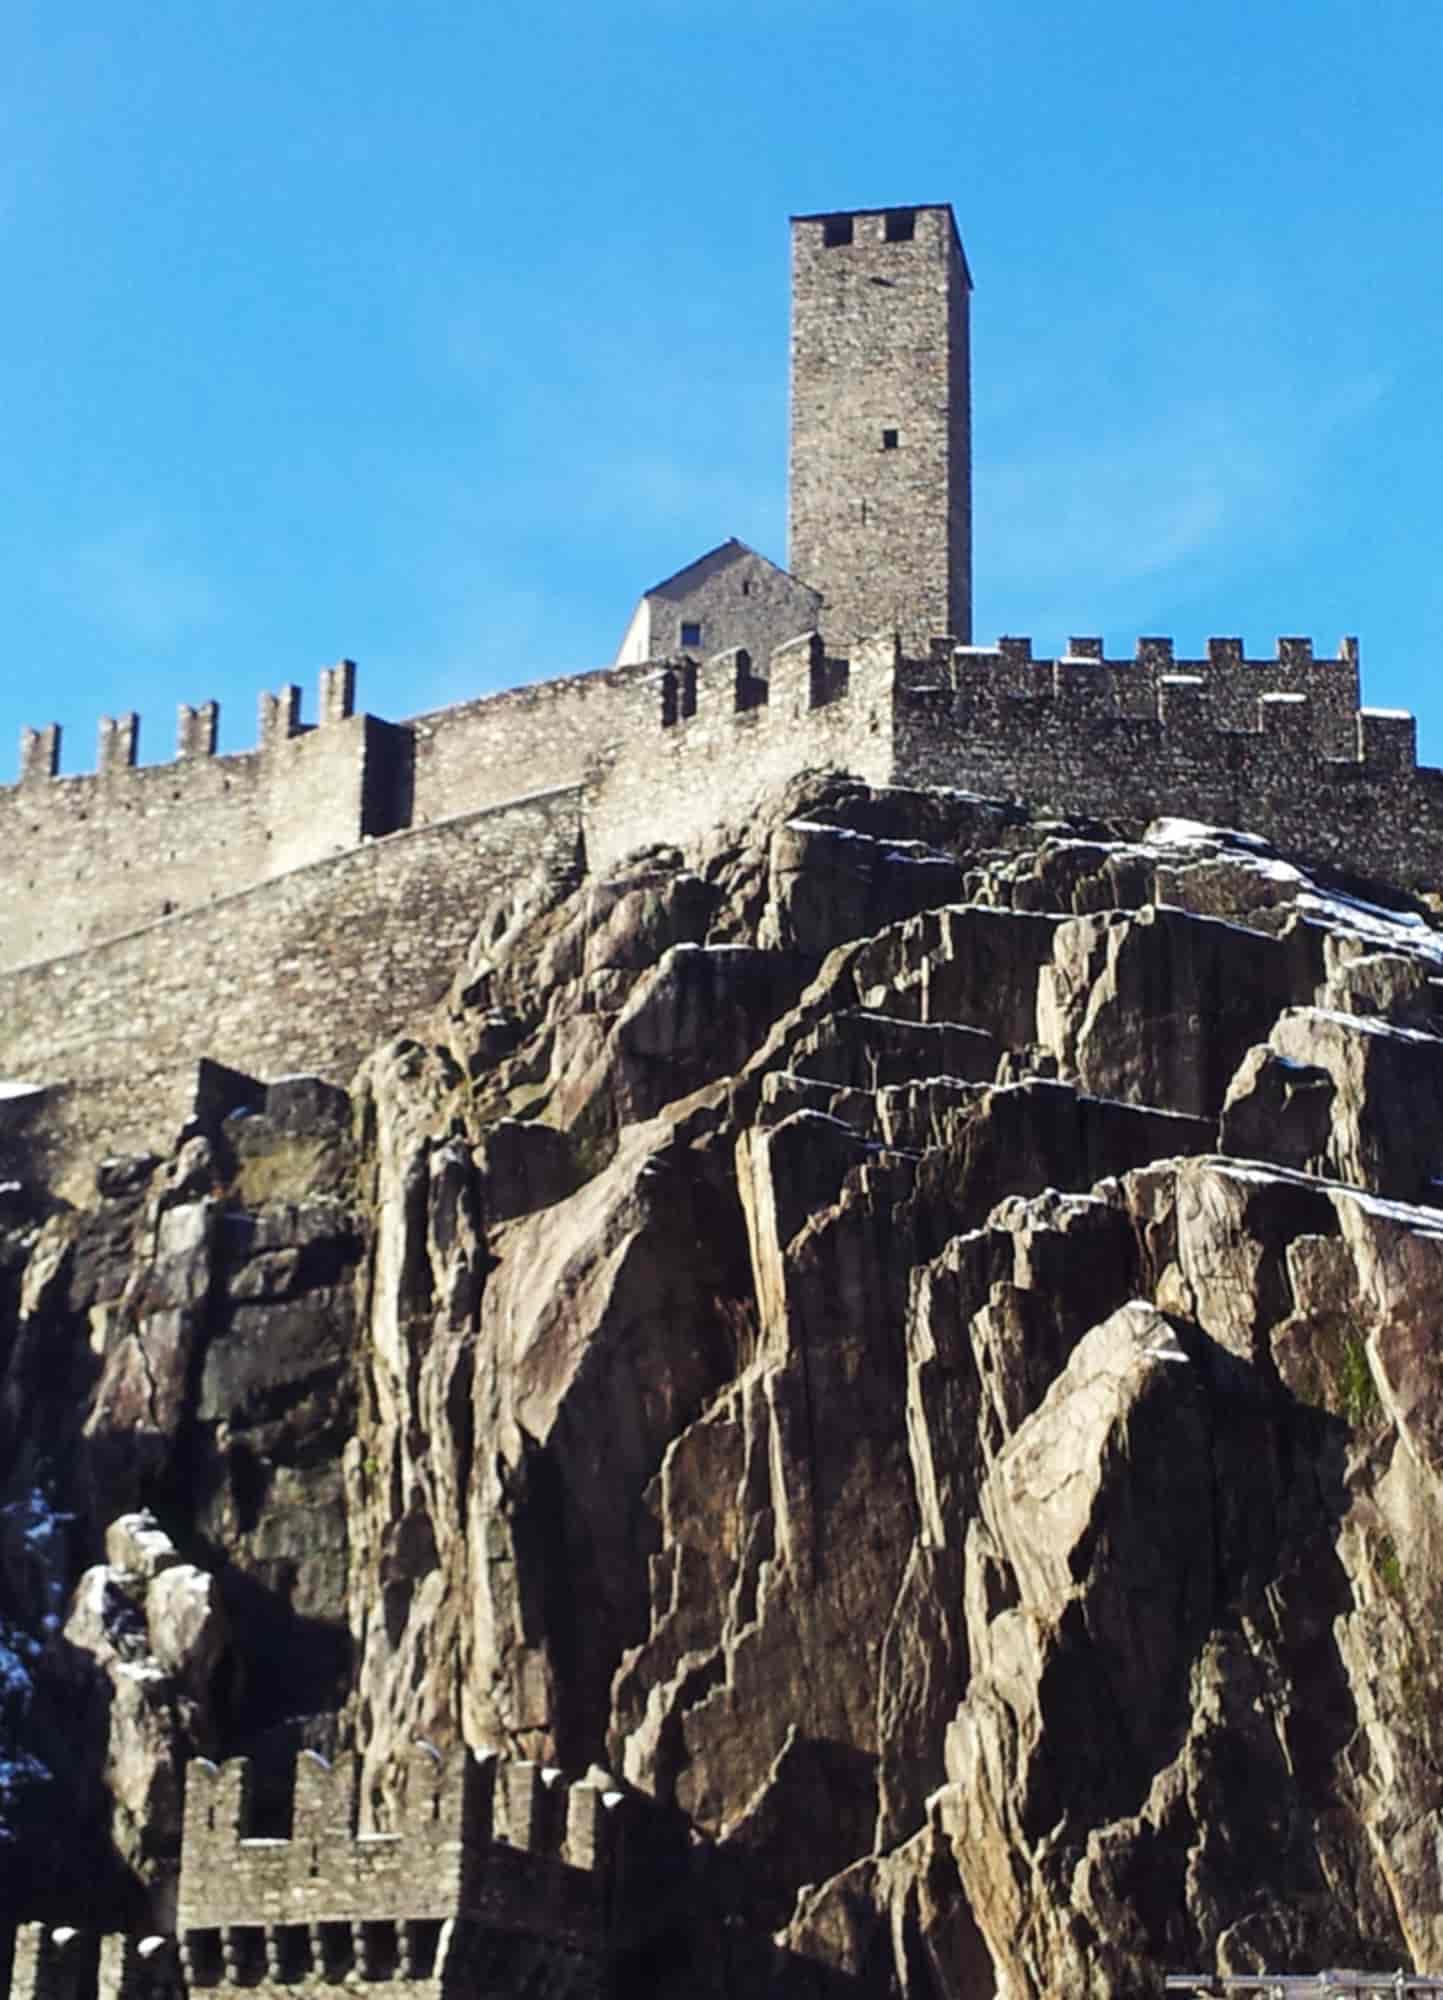 The medieval walls of Bellinzona are a Unesco site